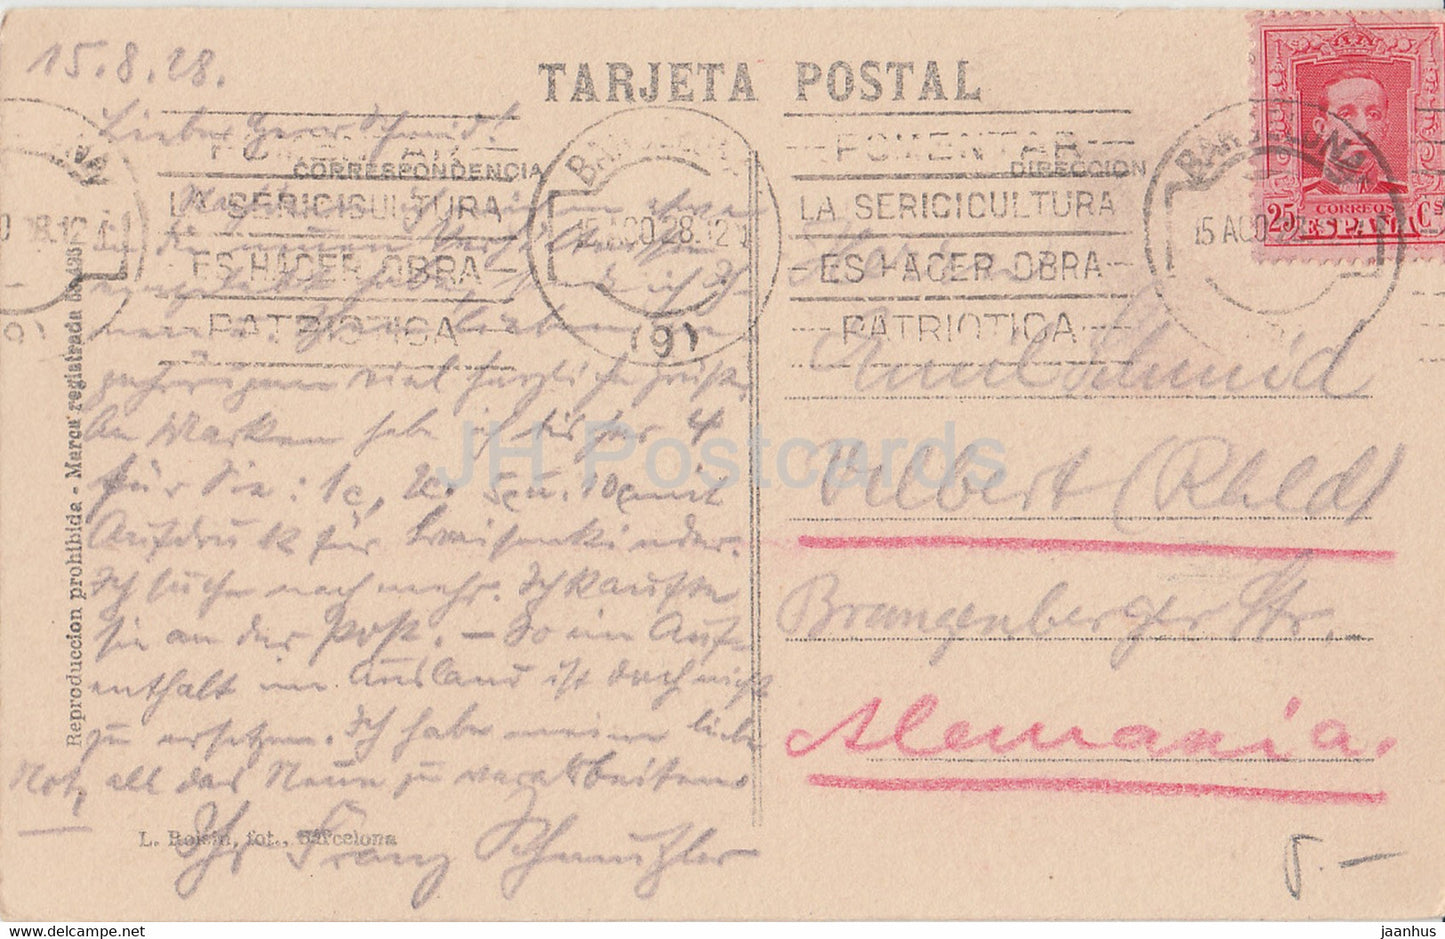 Barcelona - Arco del Triunfo - Straßenbahn - 10 - alte Postkarte - 1928 - Spanien - gebraucht